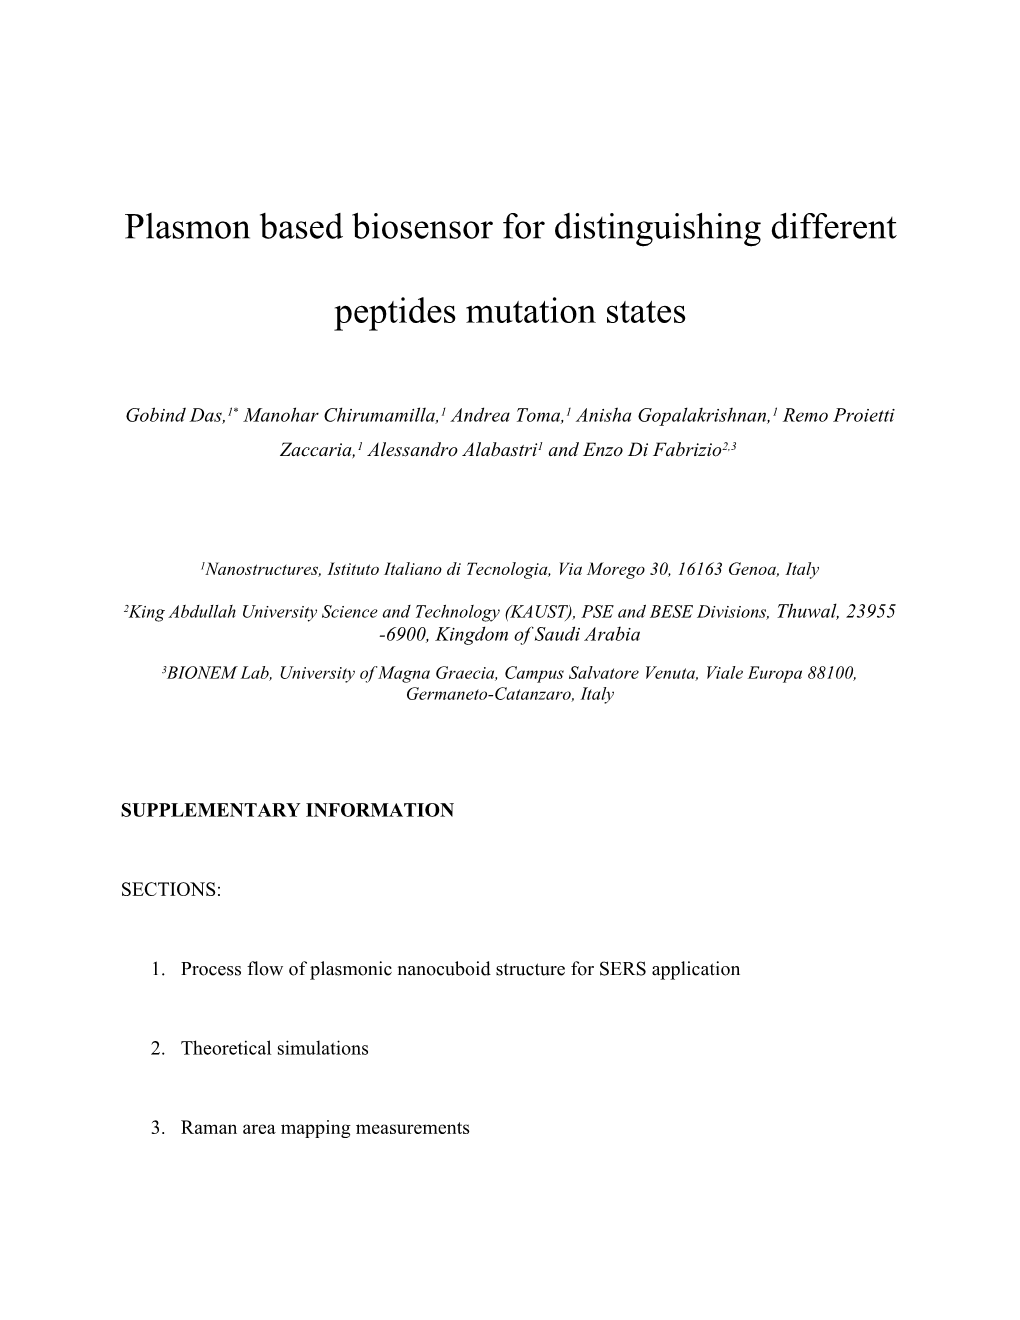 Plasmon Based Biosensor for Distinguishing Different Peptides Mutation States